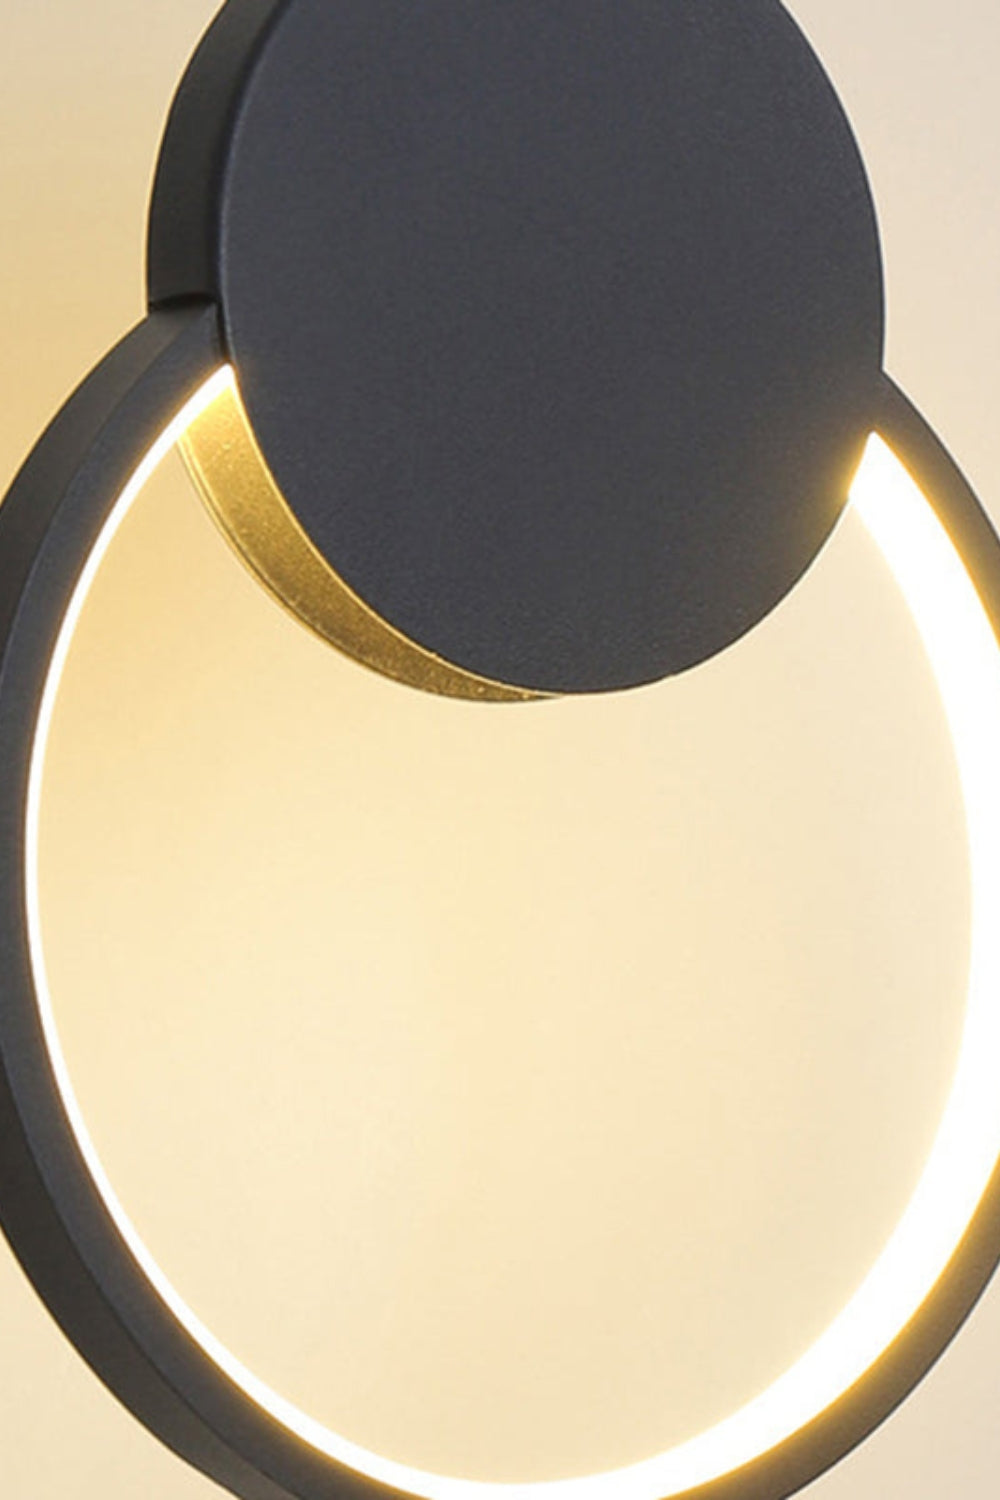 Anevo LED Pendant Lamp - SamuLighting